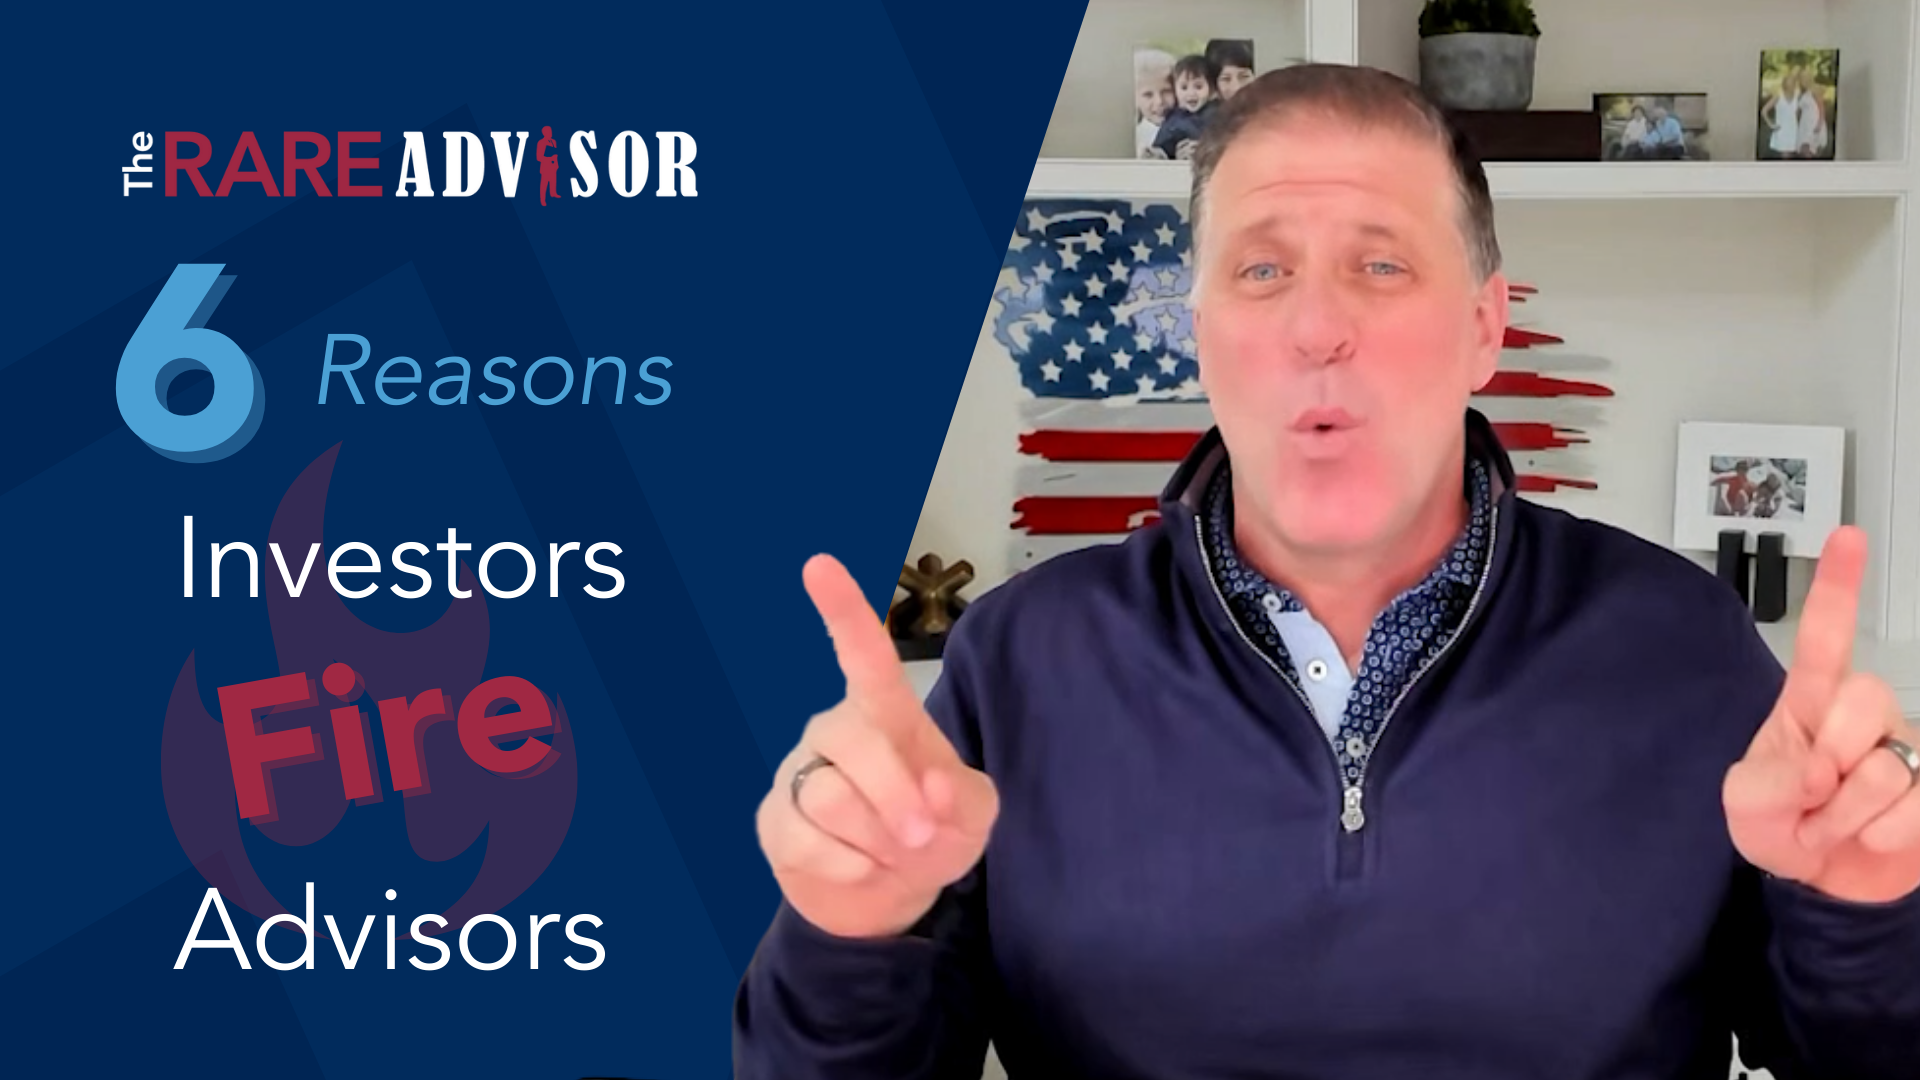 The RARE Advisor: Top 6 Reasons Investors Fire Advisors